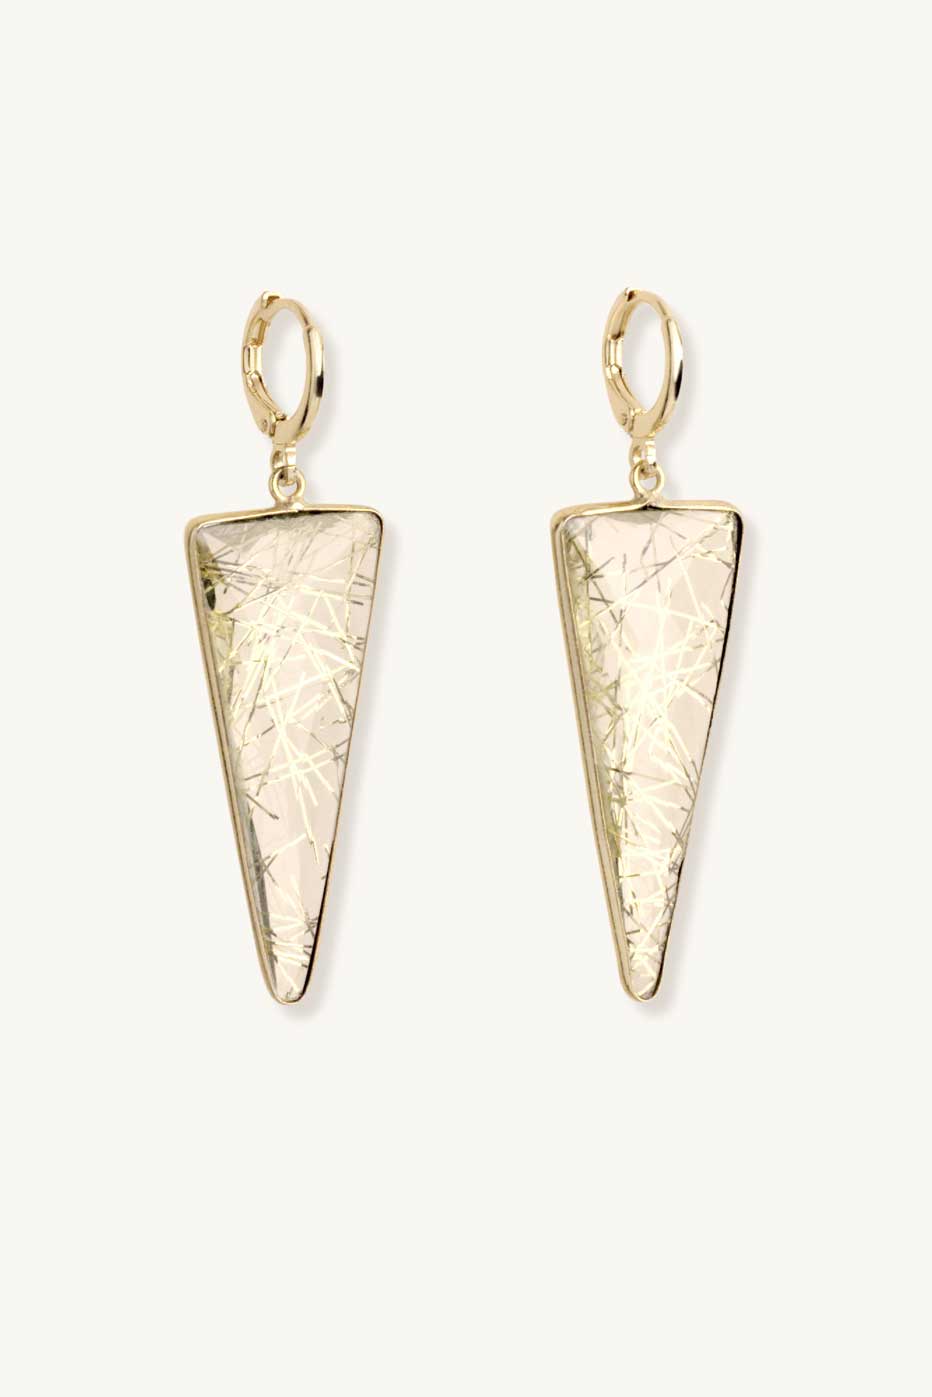 genuine gemstone edgy triangle earrings by Lavender Skyline